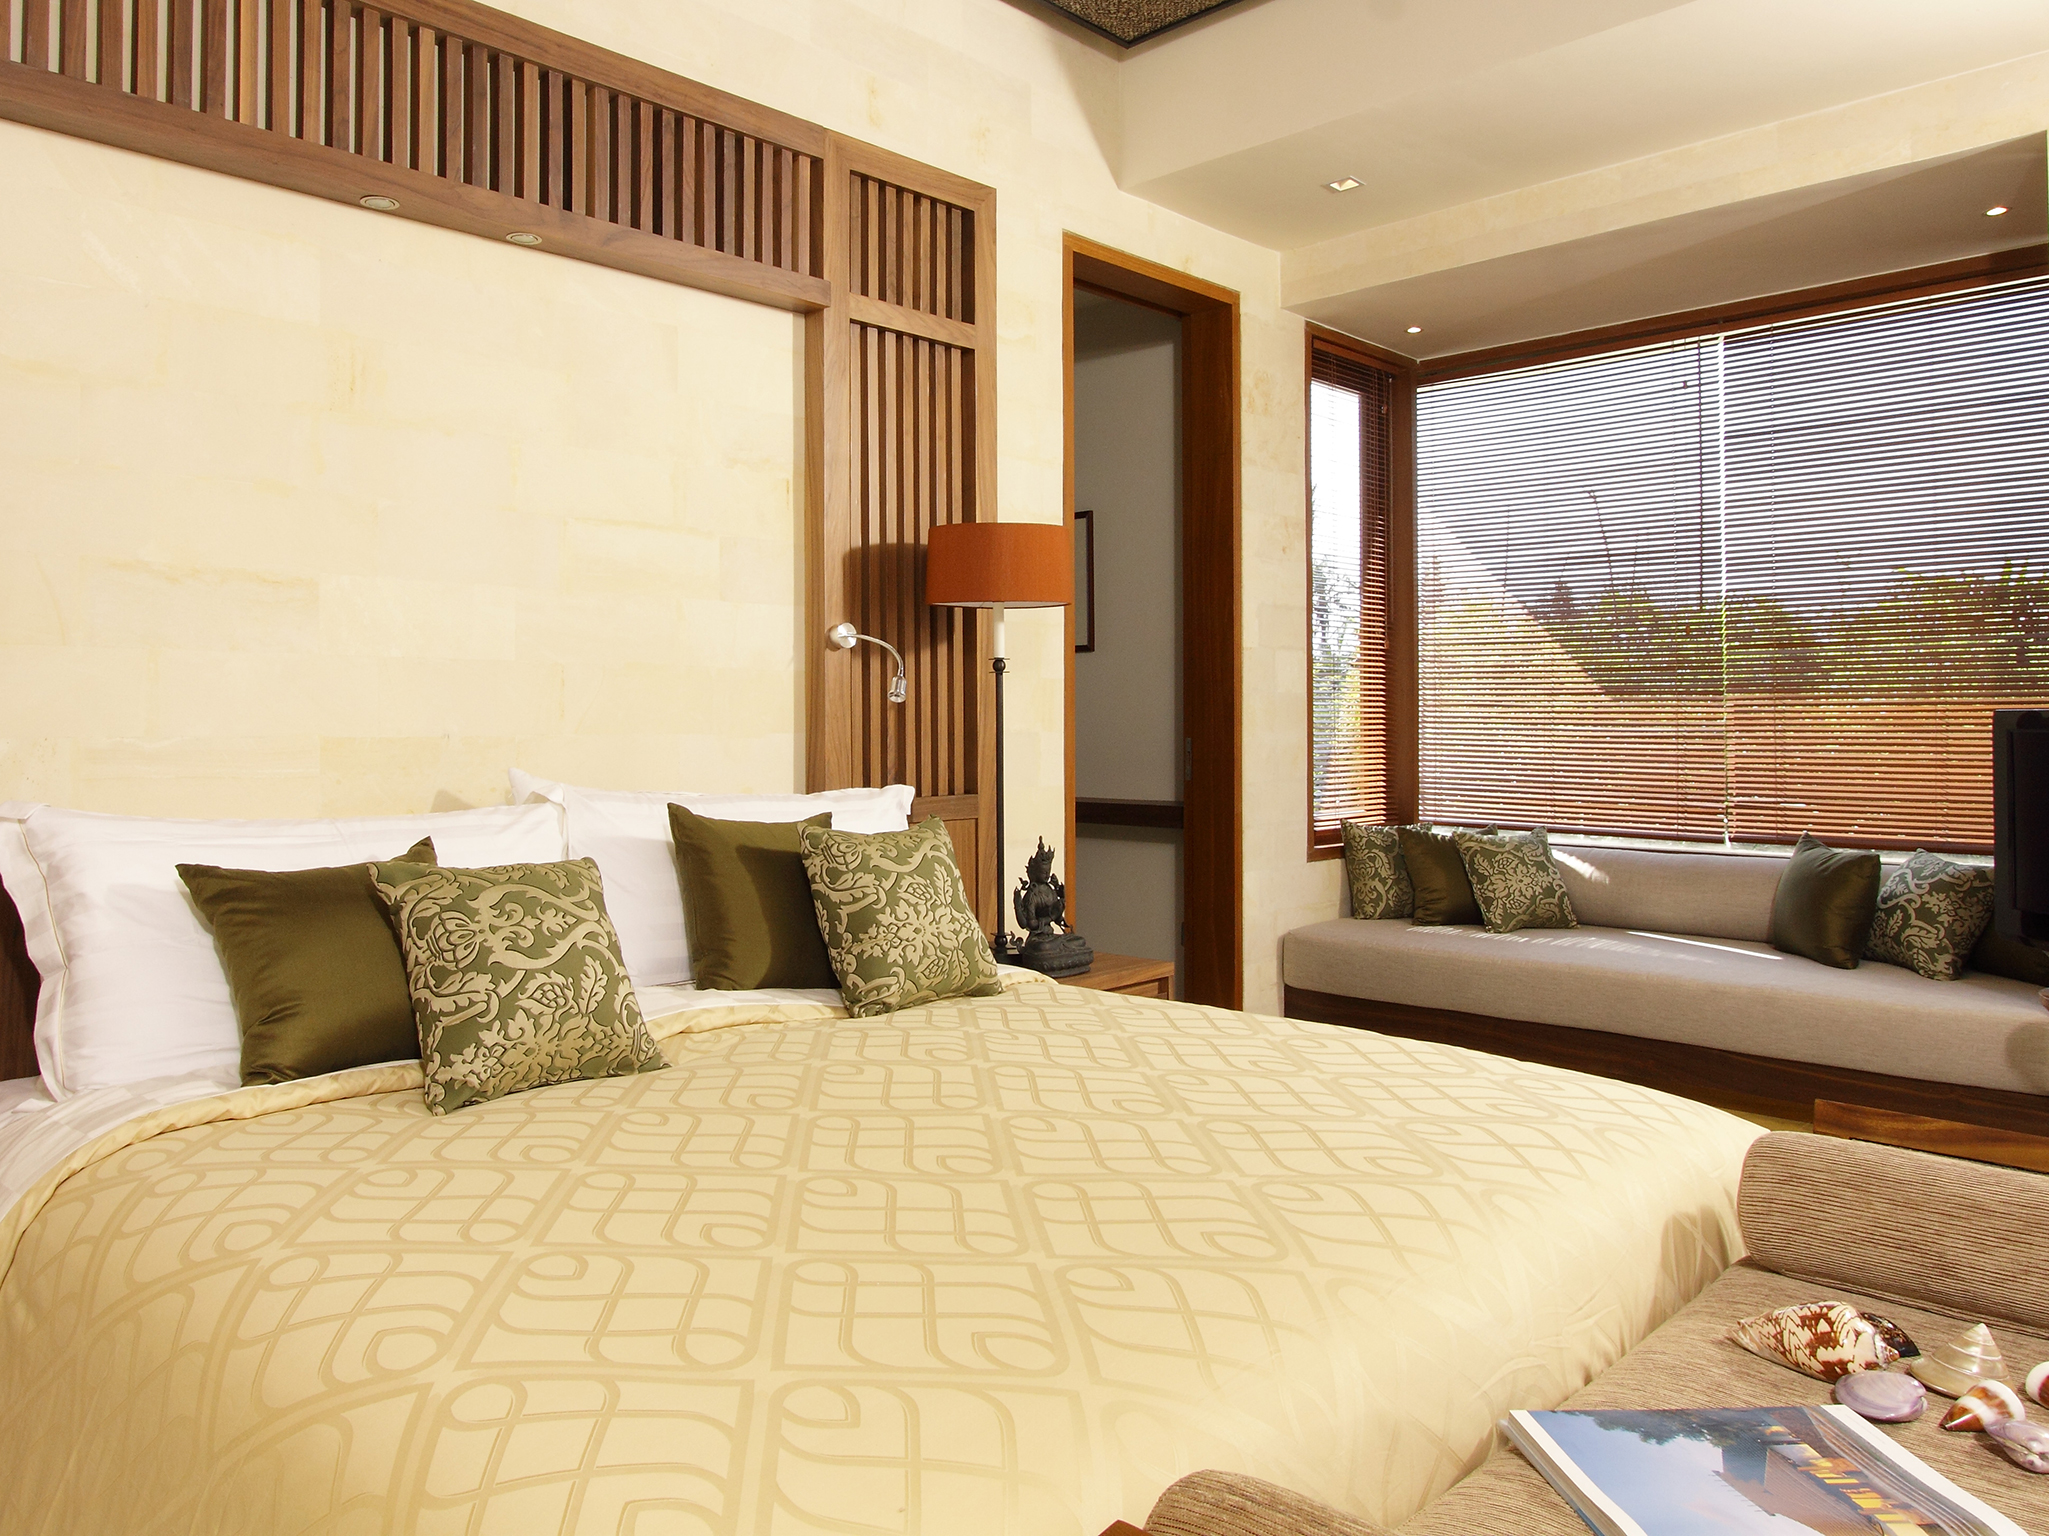 21. Guest bedroom - Dea Villas - Villa Sarasvati, Canggu, Bali